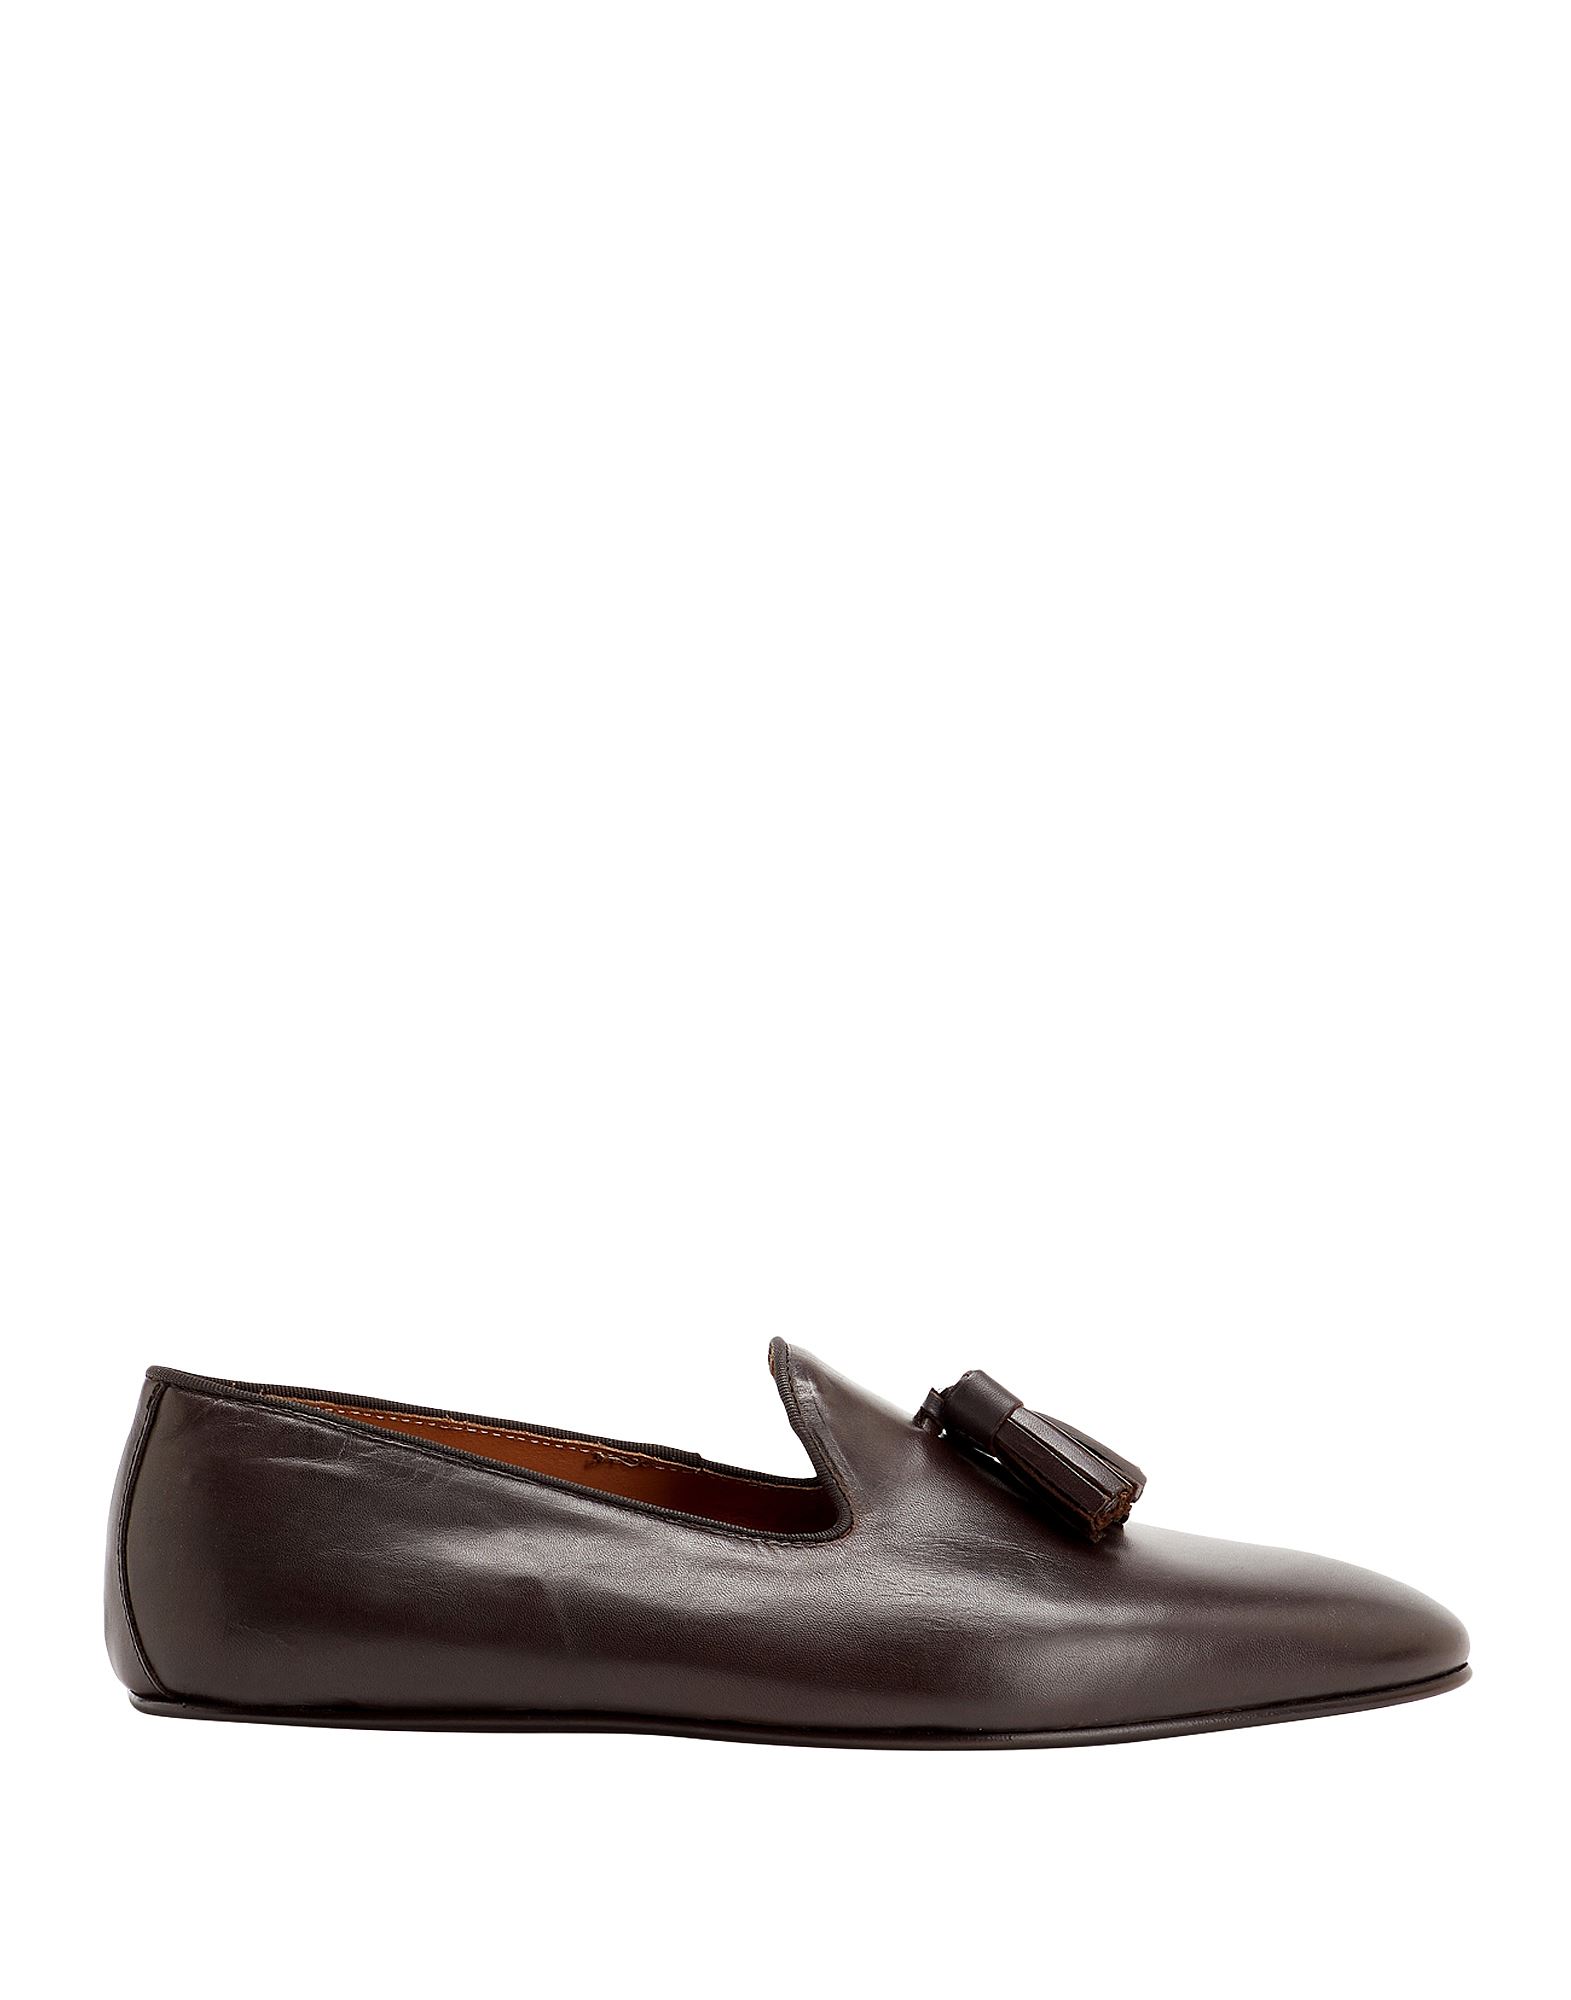 Shop 8 By Yoox Leather Tassel Slipper Man Loafers Dark Brown Size 9 Calfskin